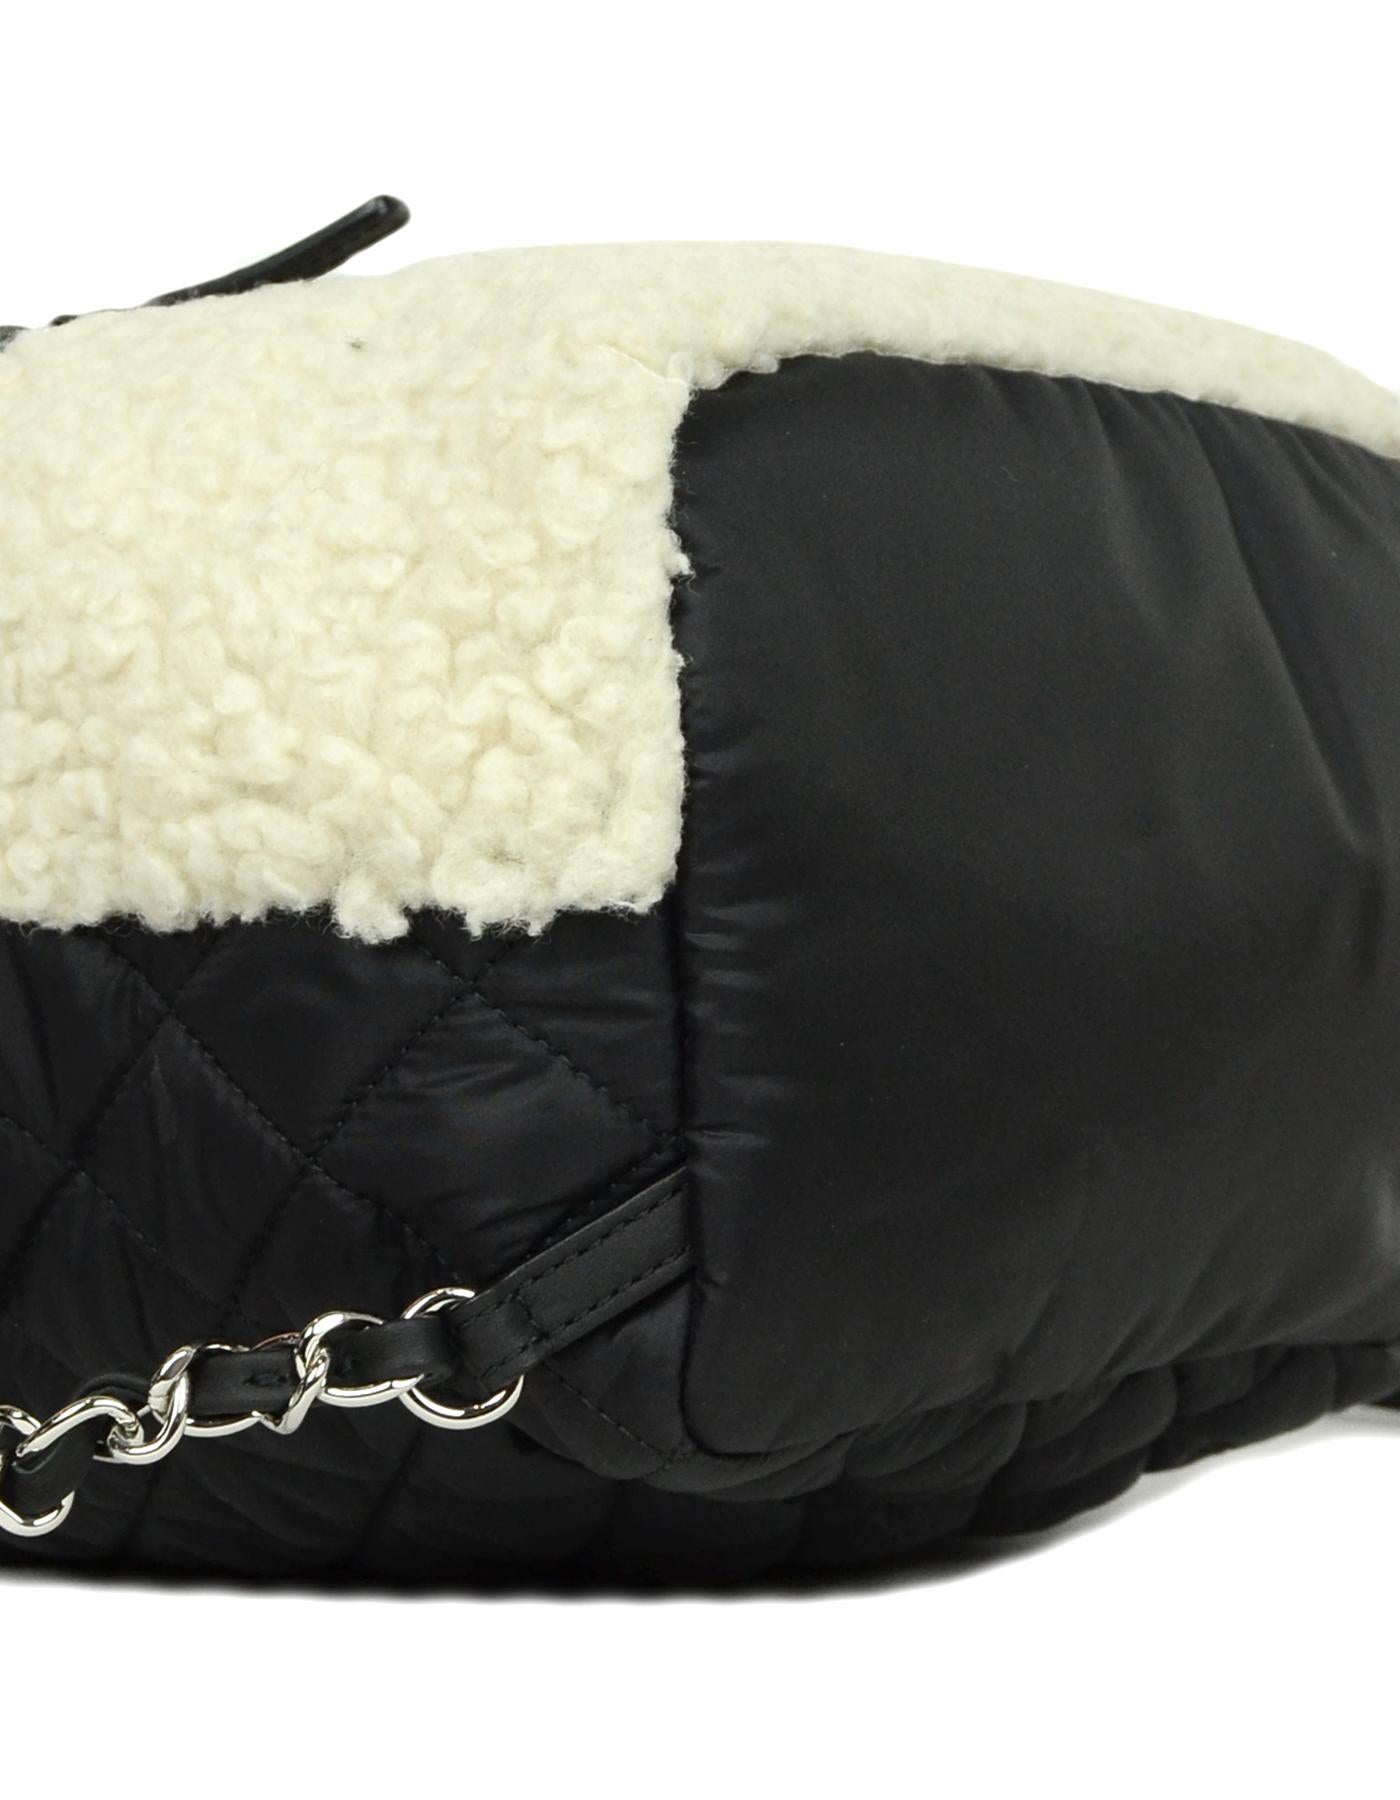 Women's Chanel Black/Beige Ecru Nylon & Shearling Wool Coco Neige Backpack Bag rt. $3800